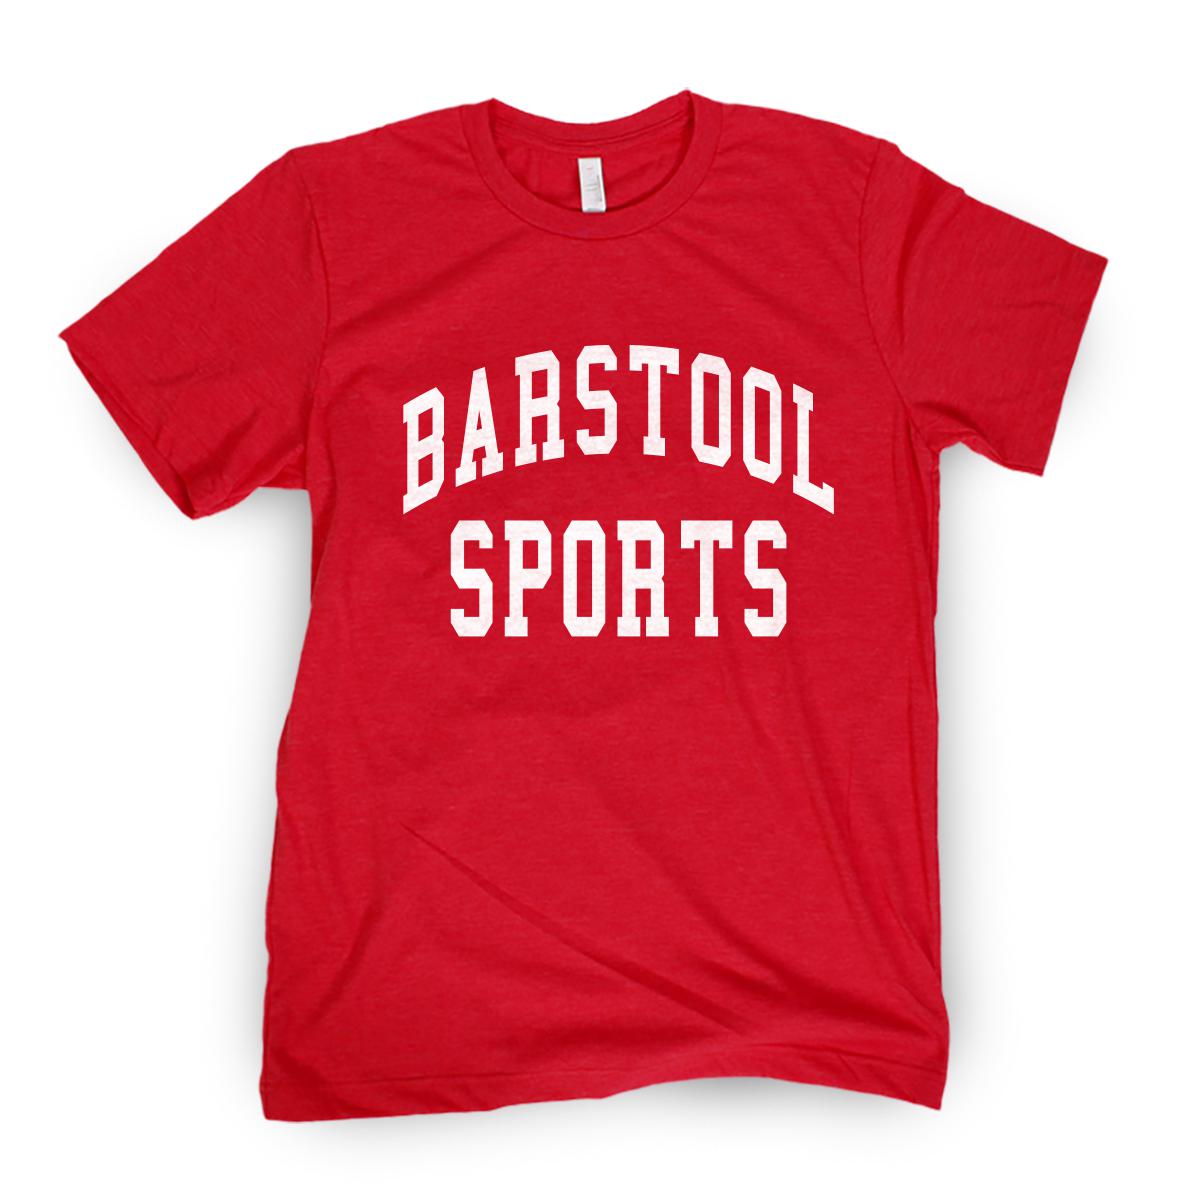 Barstool Sports Tee-T-Shirts-Barstool Sports-Red-S-Barstool Sports